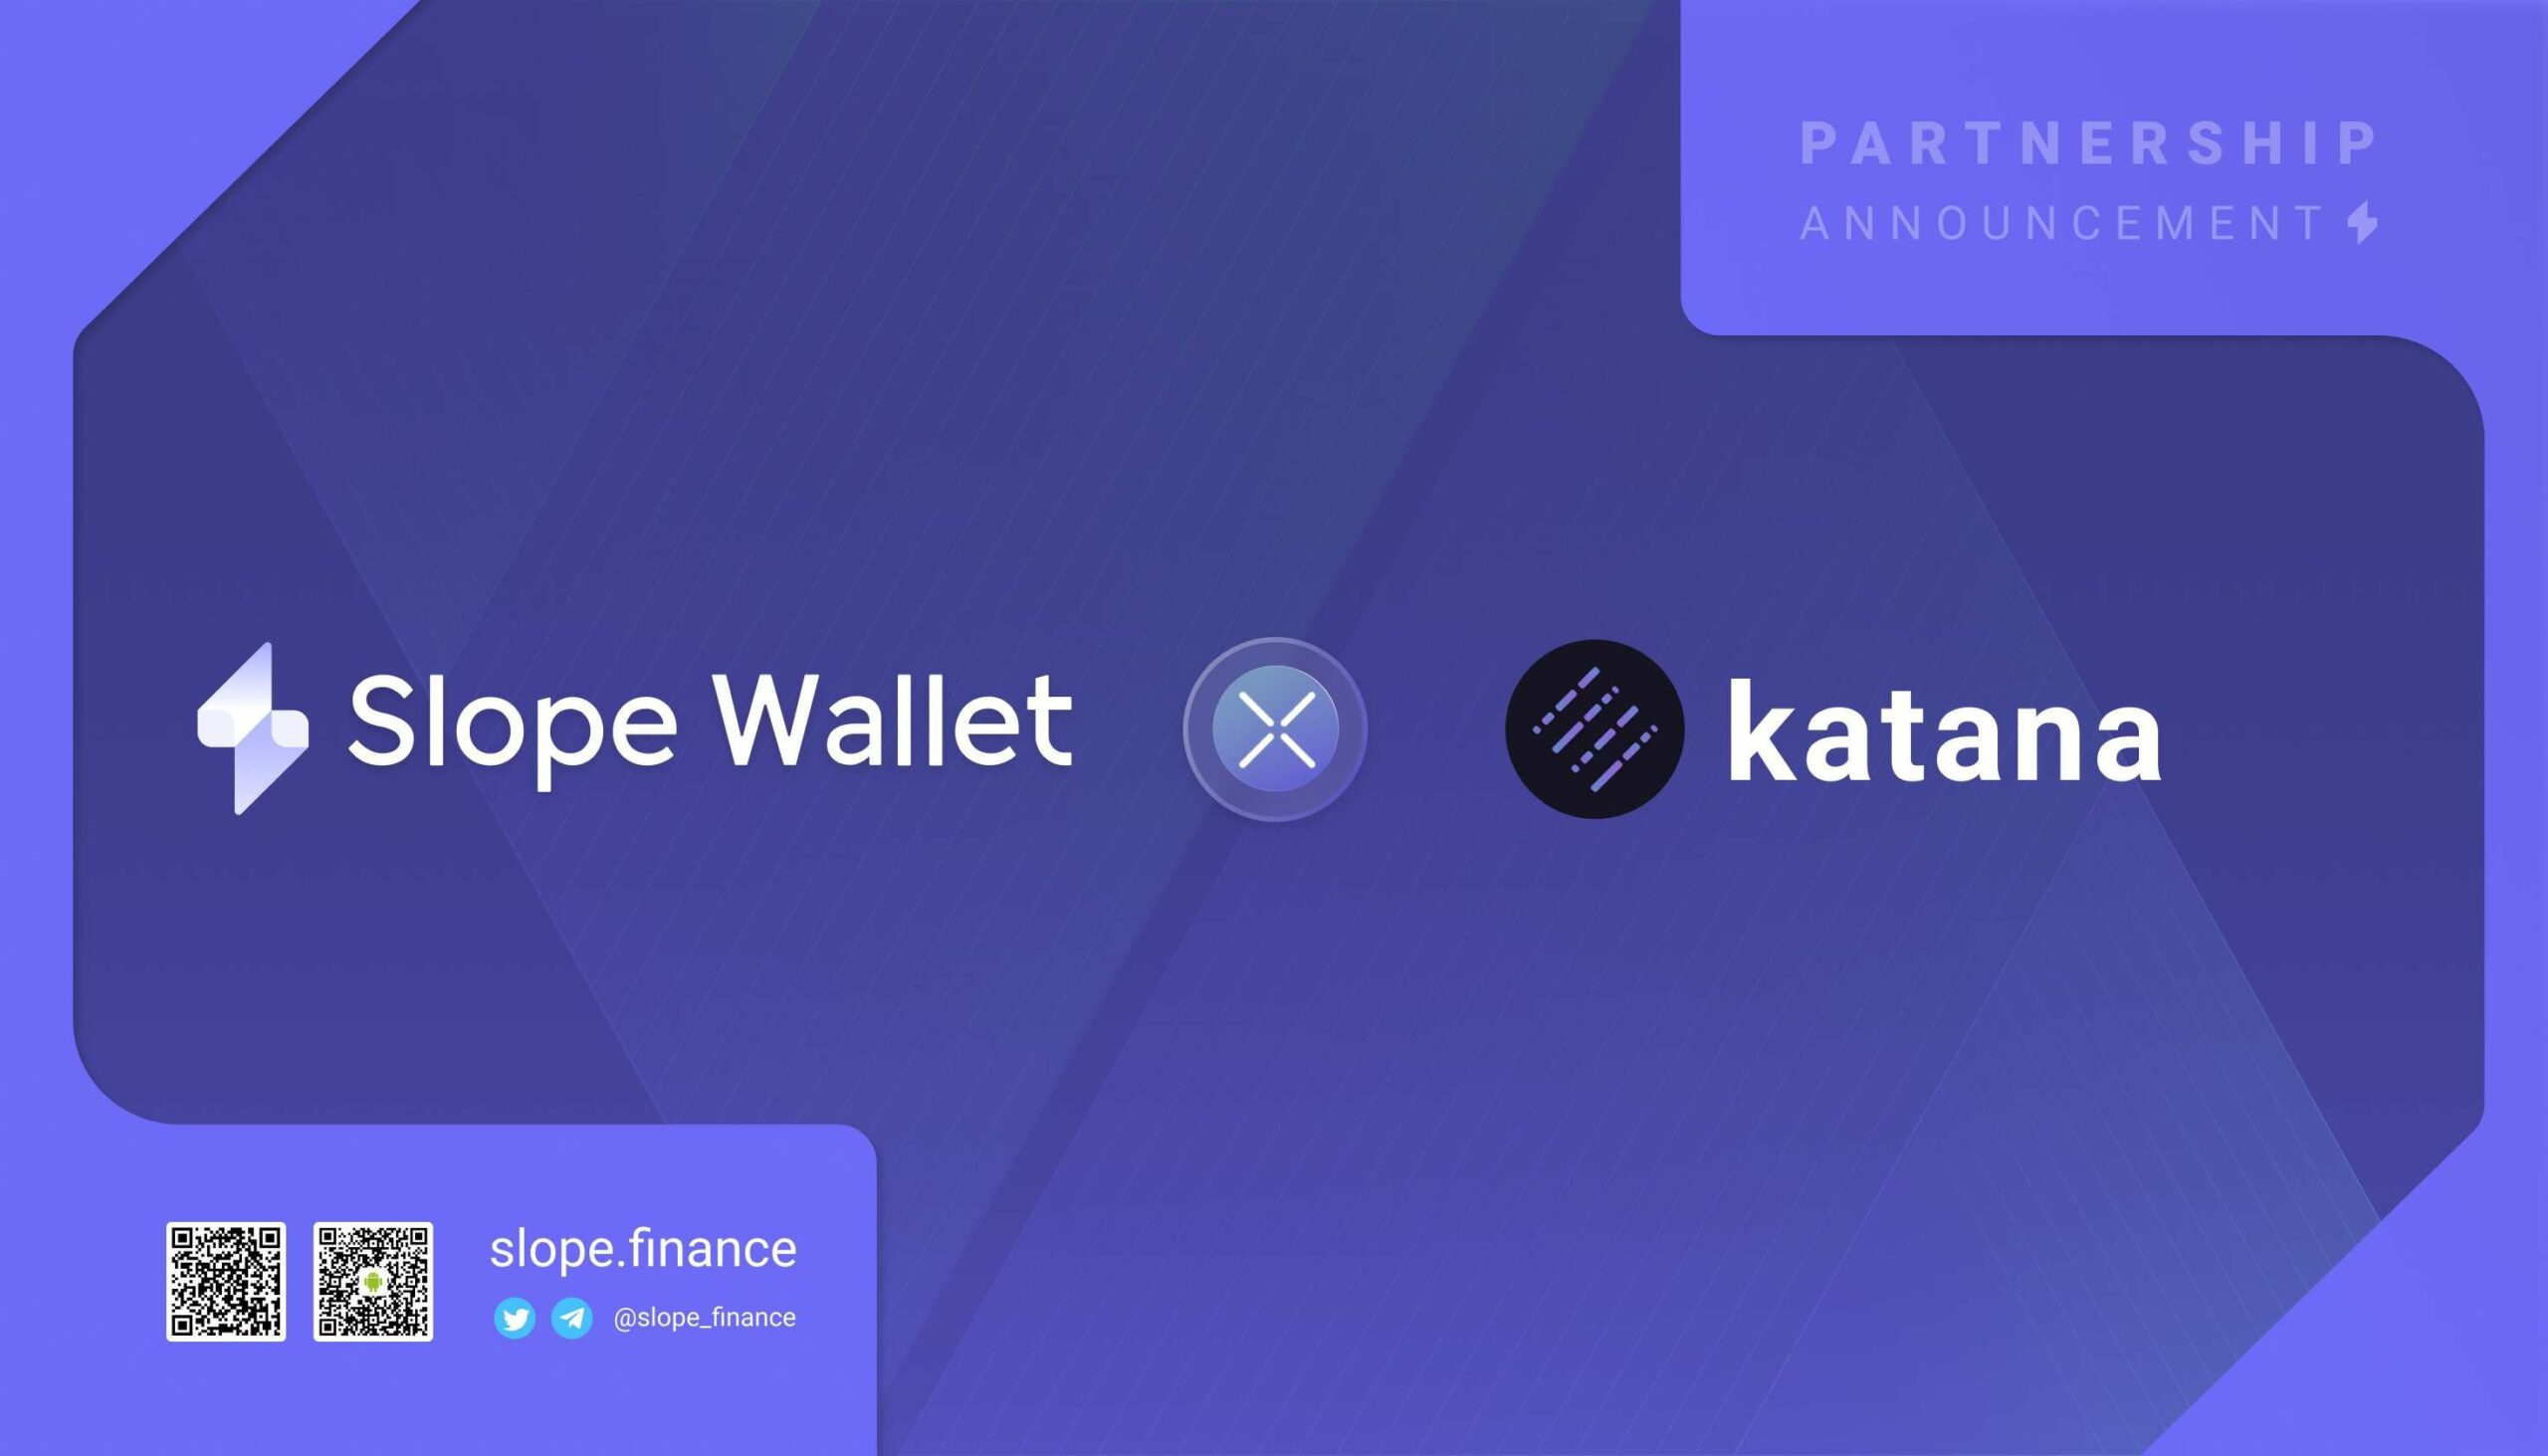 Katana hợp tác với Slope Wallet